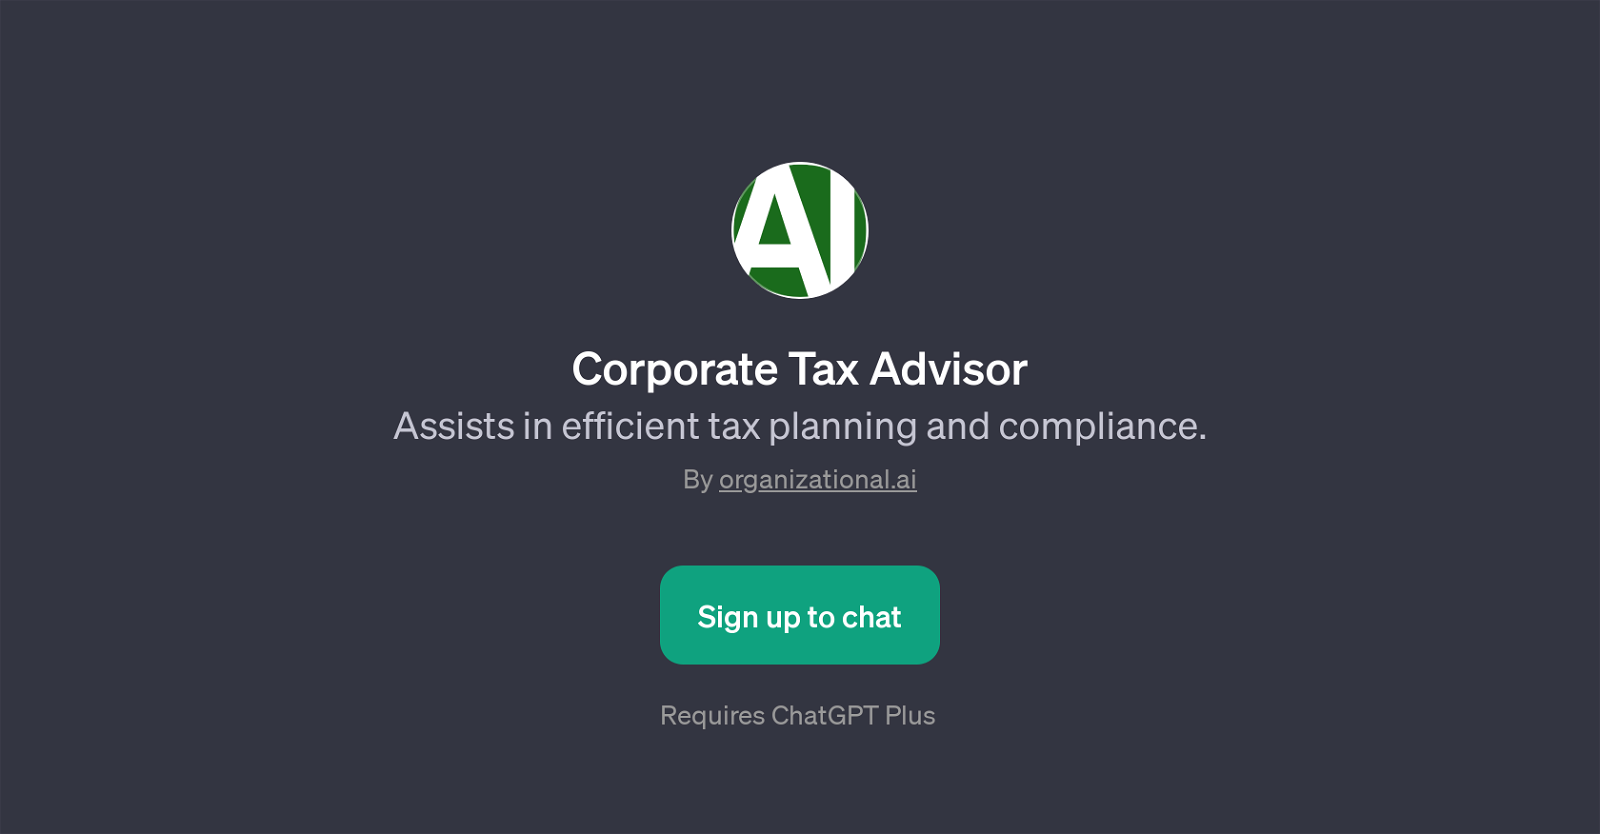 Corporate Tax Advisor website